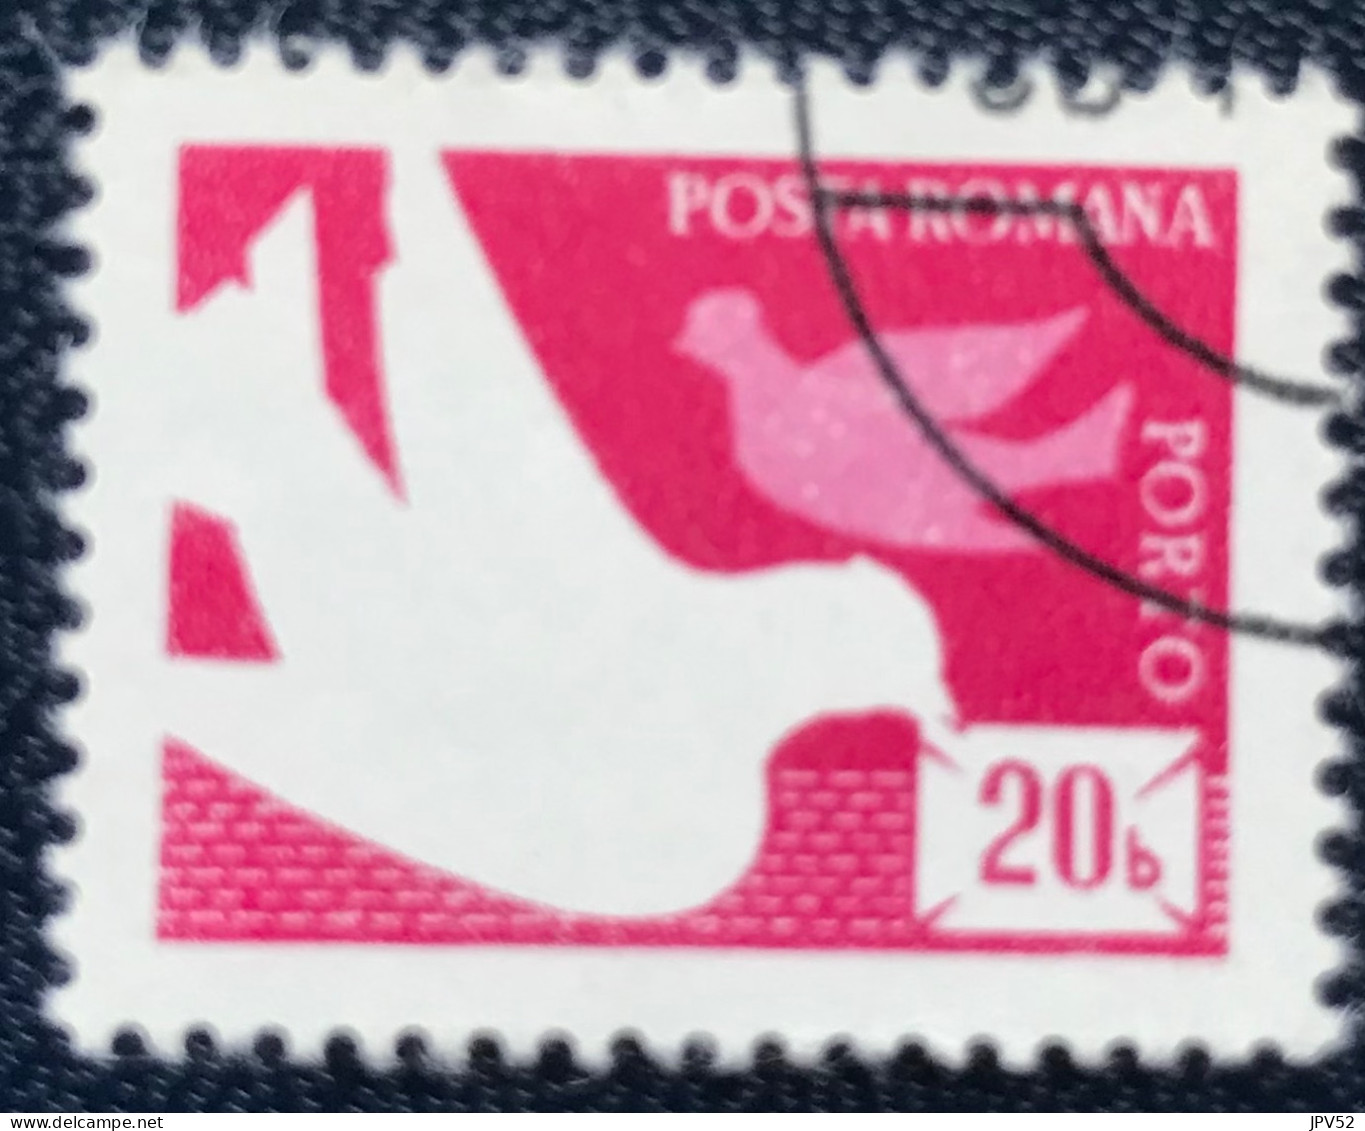 Romana - Roemenië - C14/54 - 1974 - (°)used - Michel 121 - Postduiven - Strafport